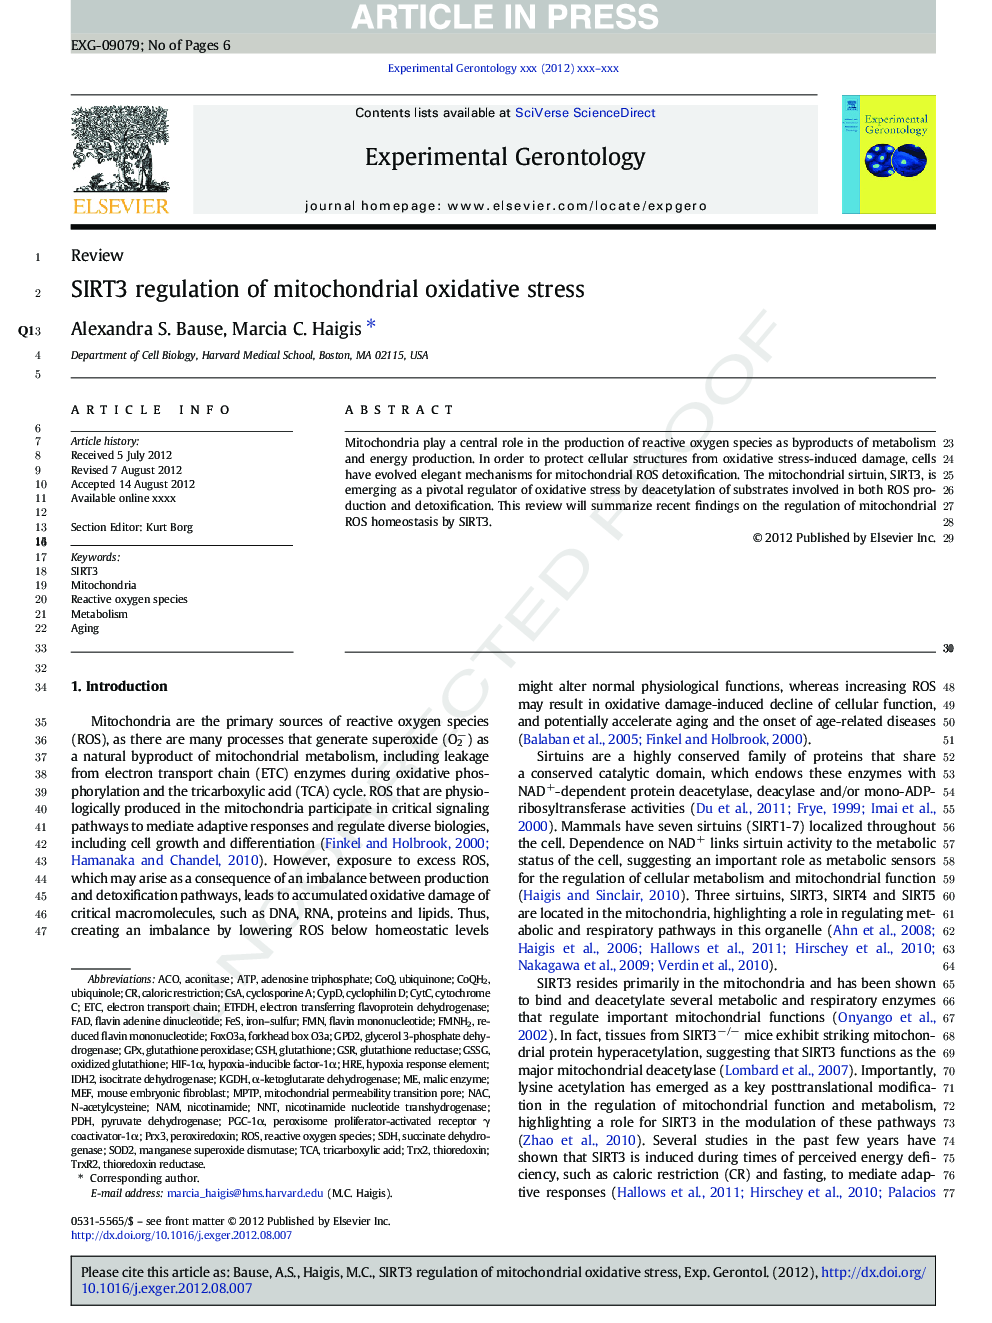 SIRT3 regulation of mitochondrial oxidative stress